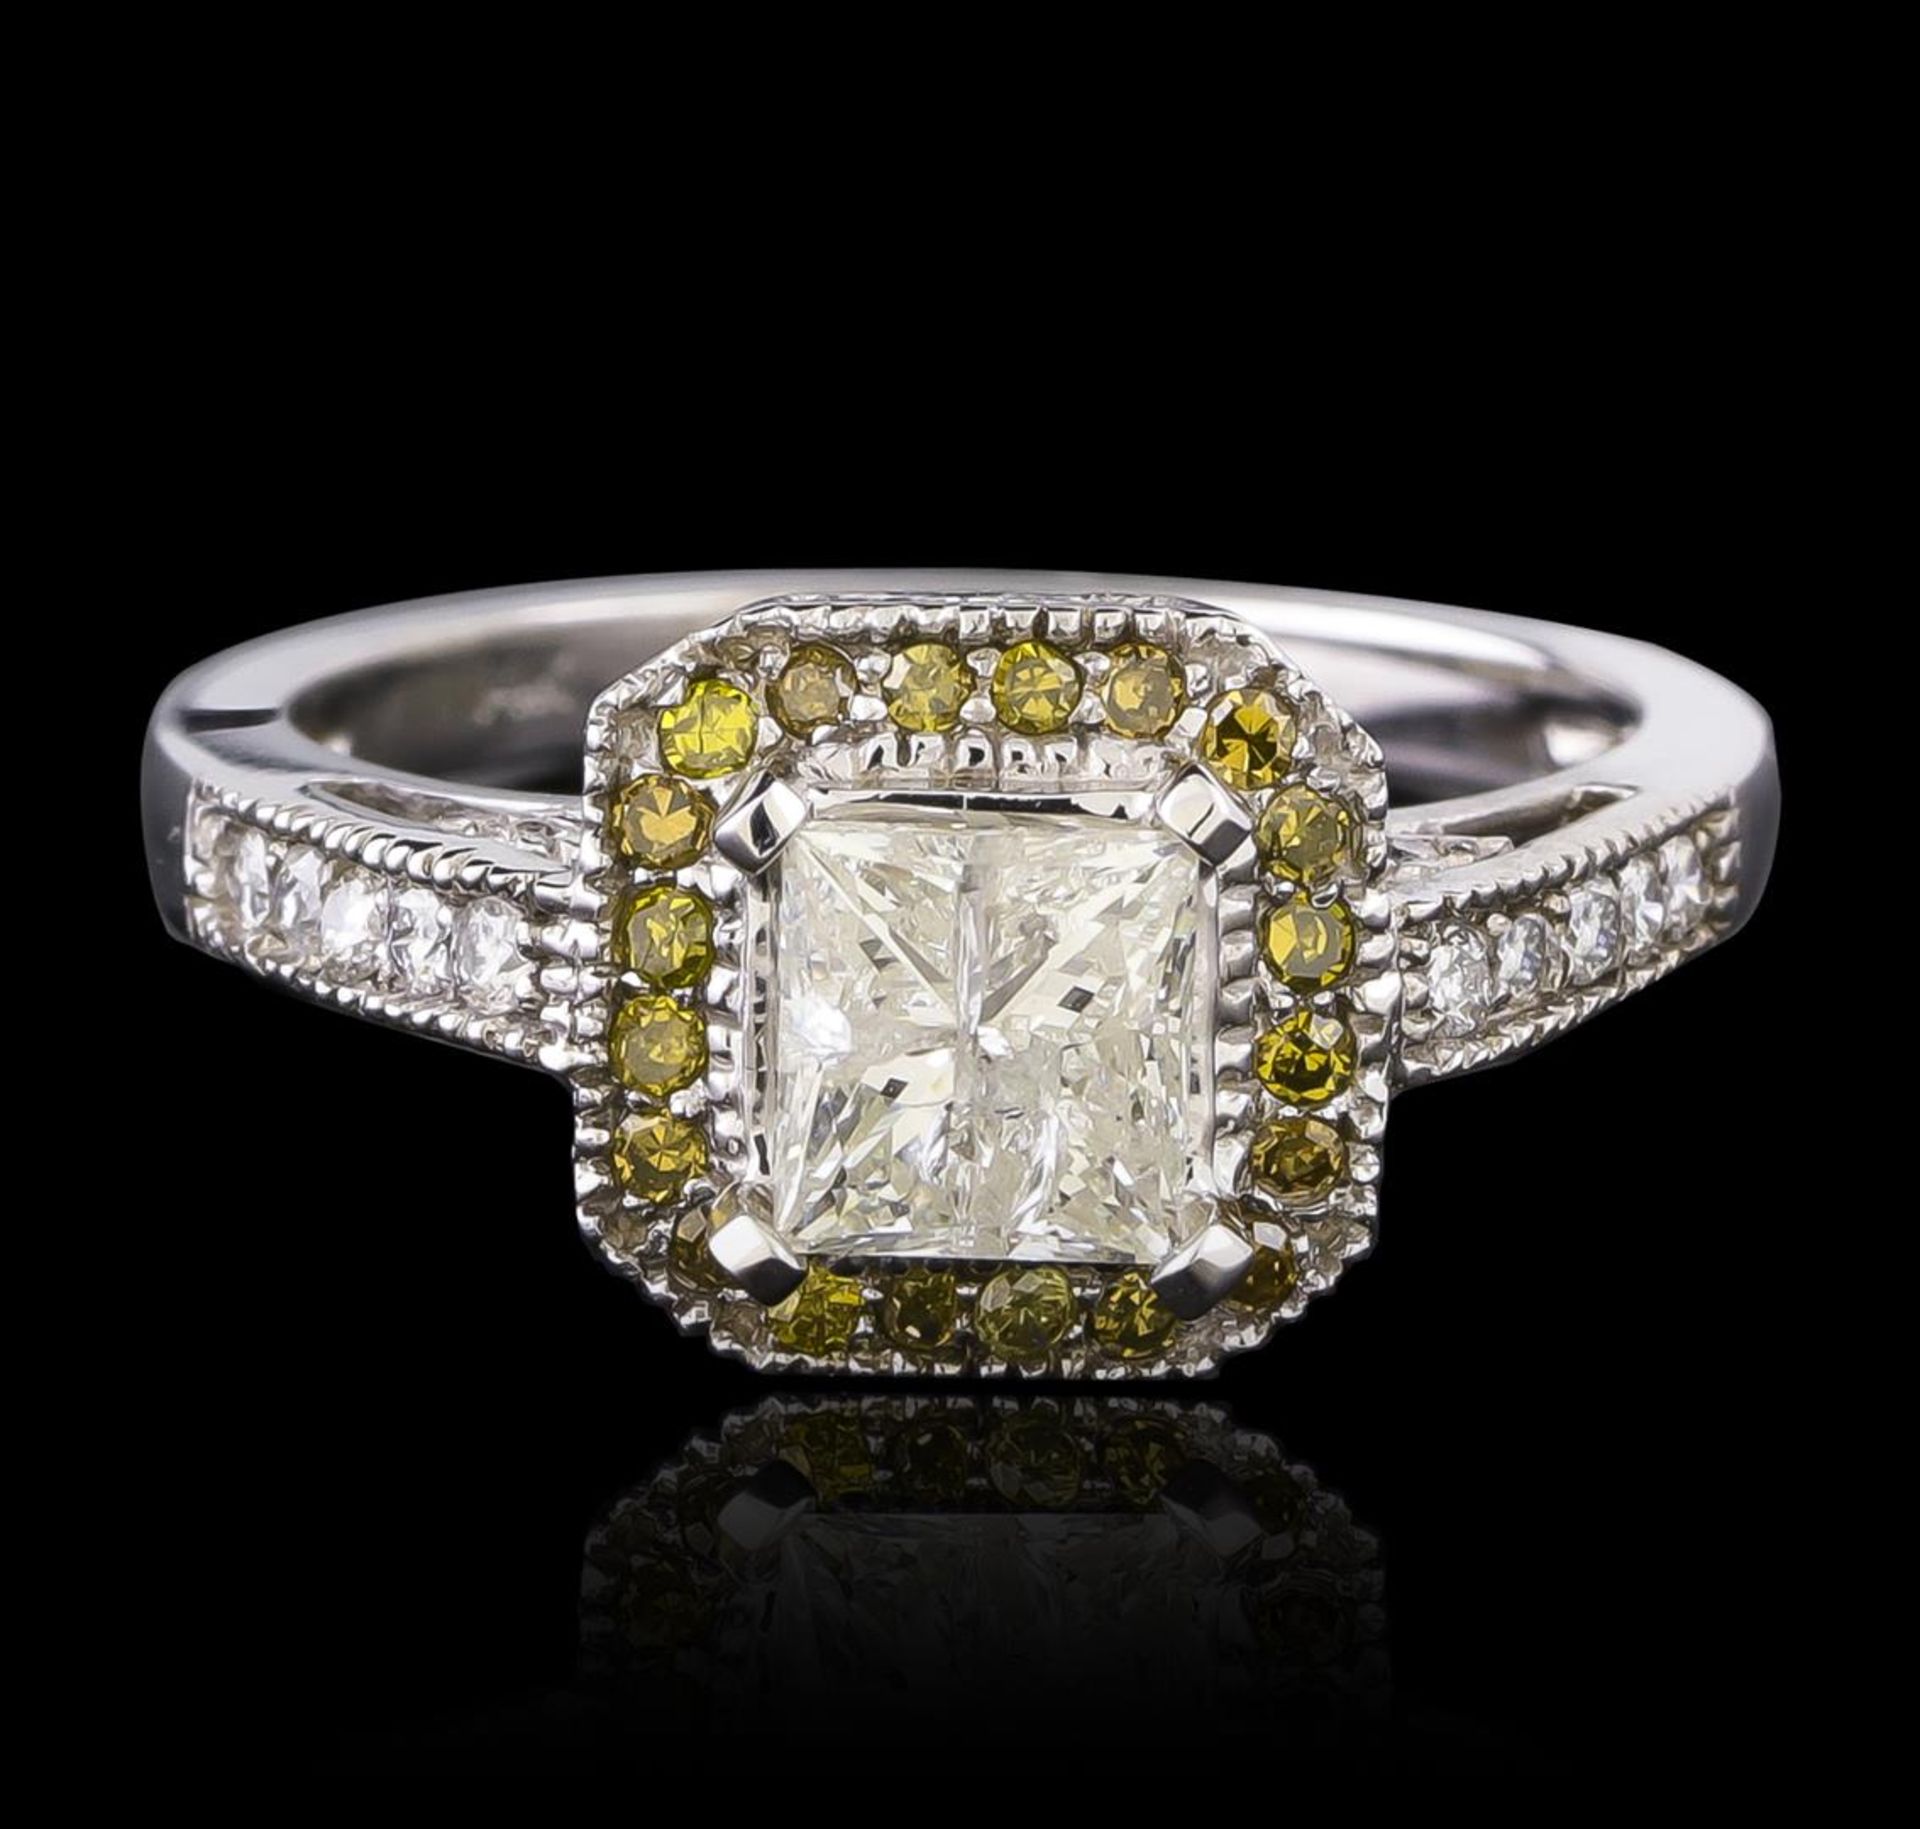 14KT White Gold 1.31 ctw Diamond Ring - Image 2 of 5